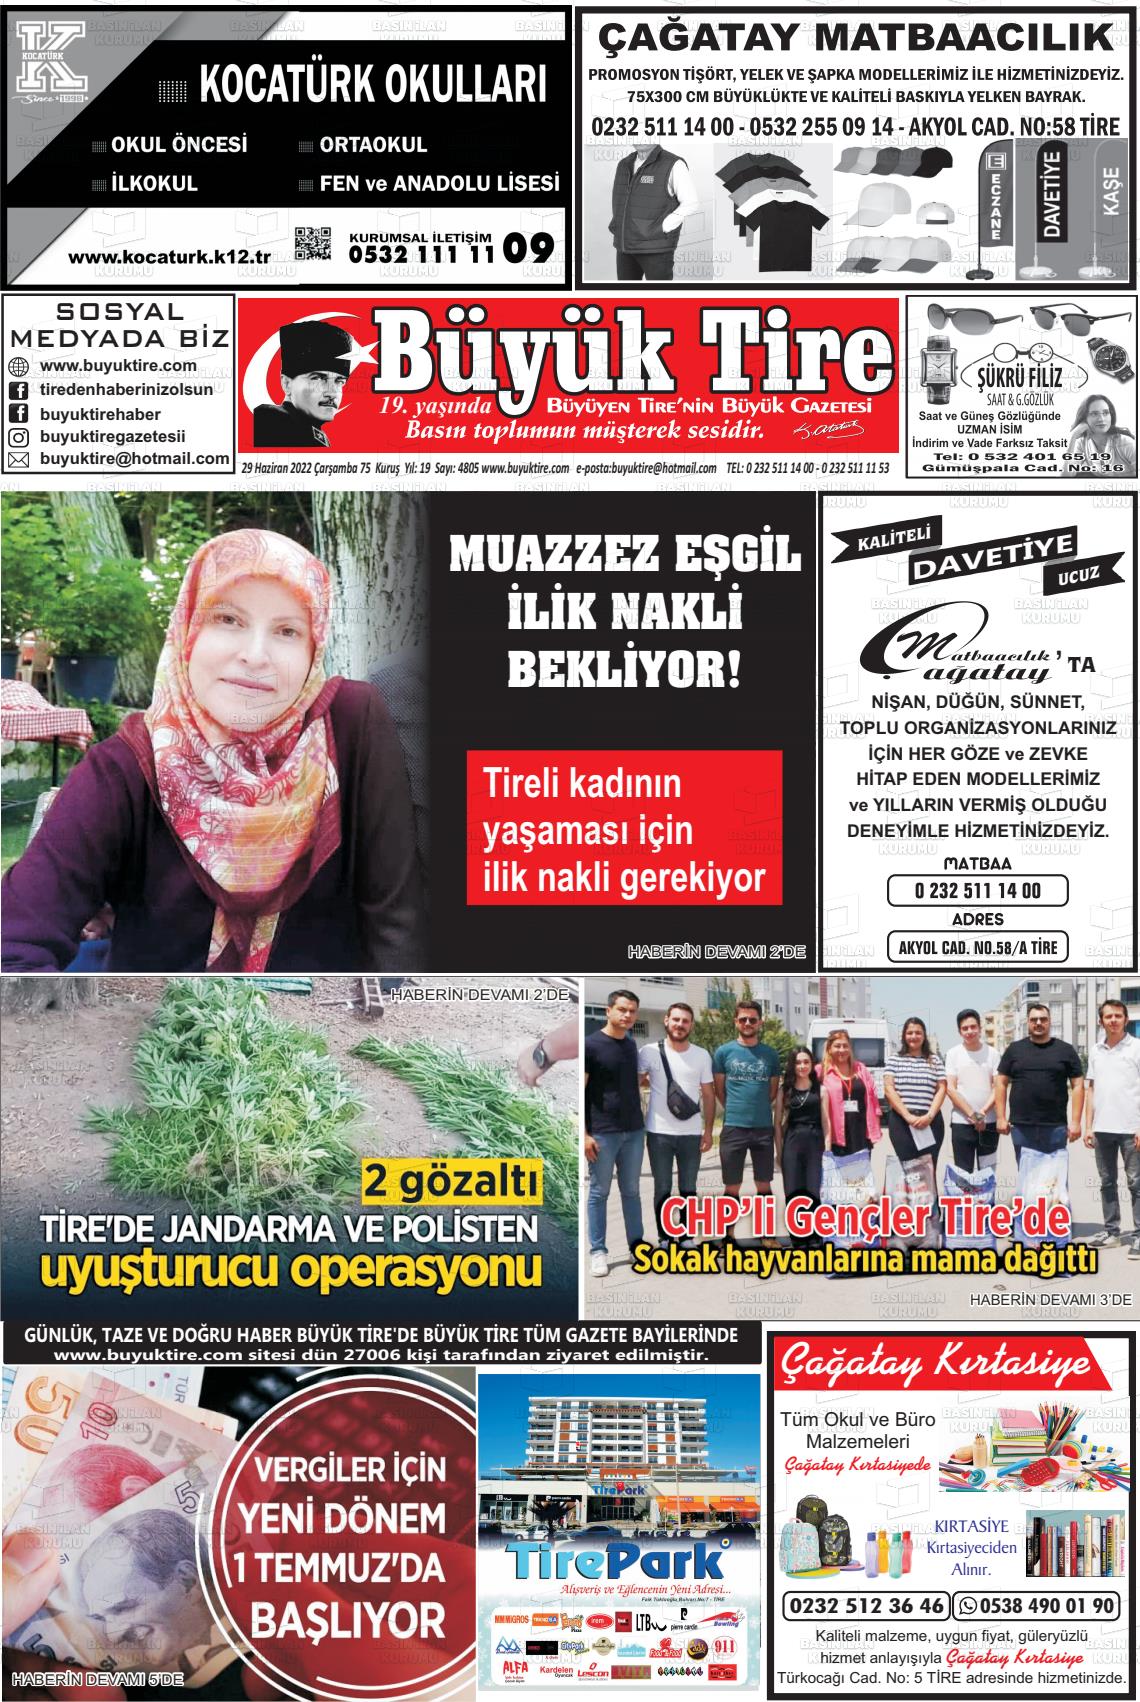 29 Haziran 2022 Büyük Tire Gazete Manşeti